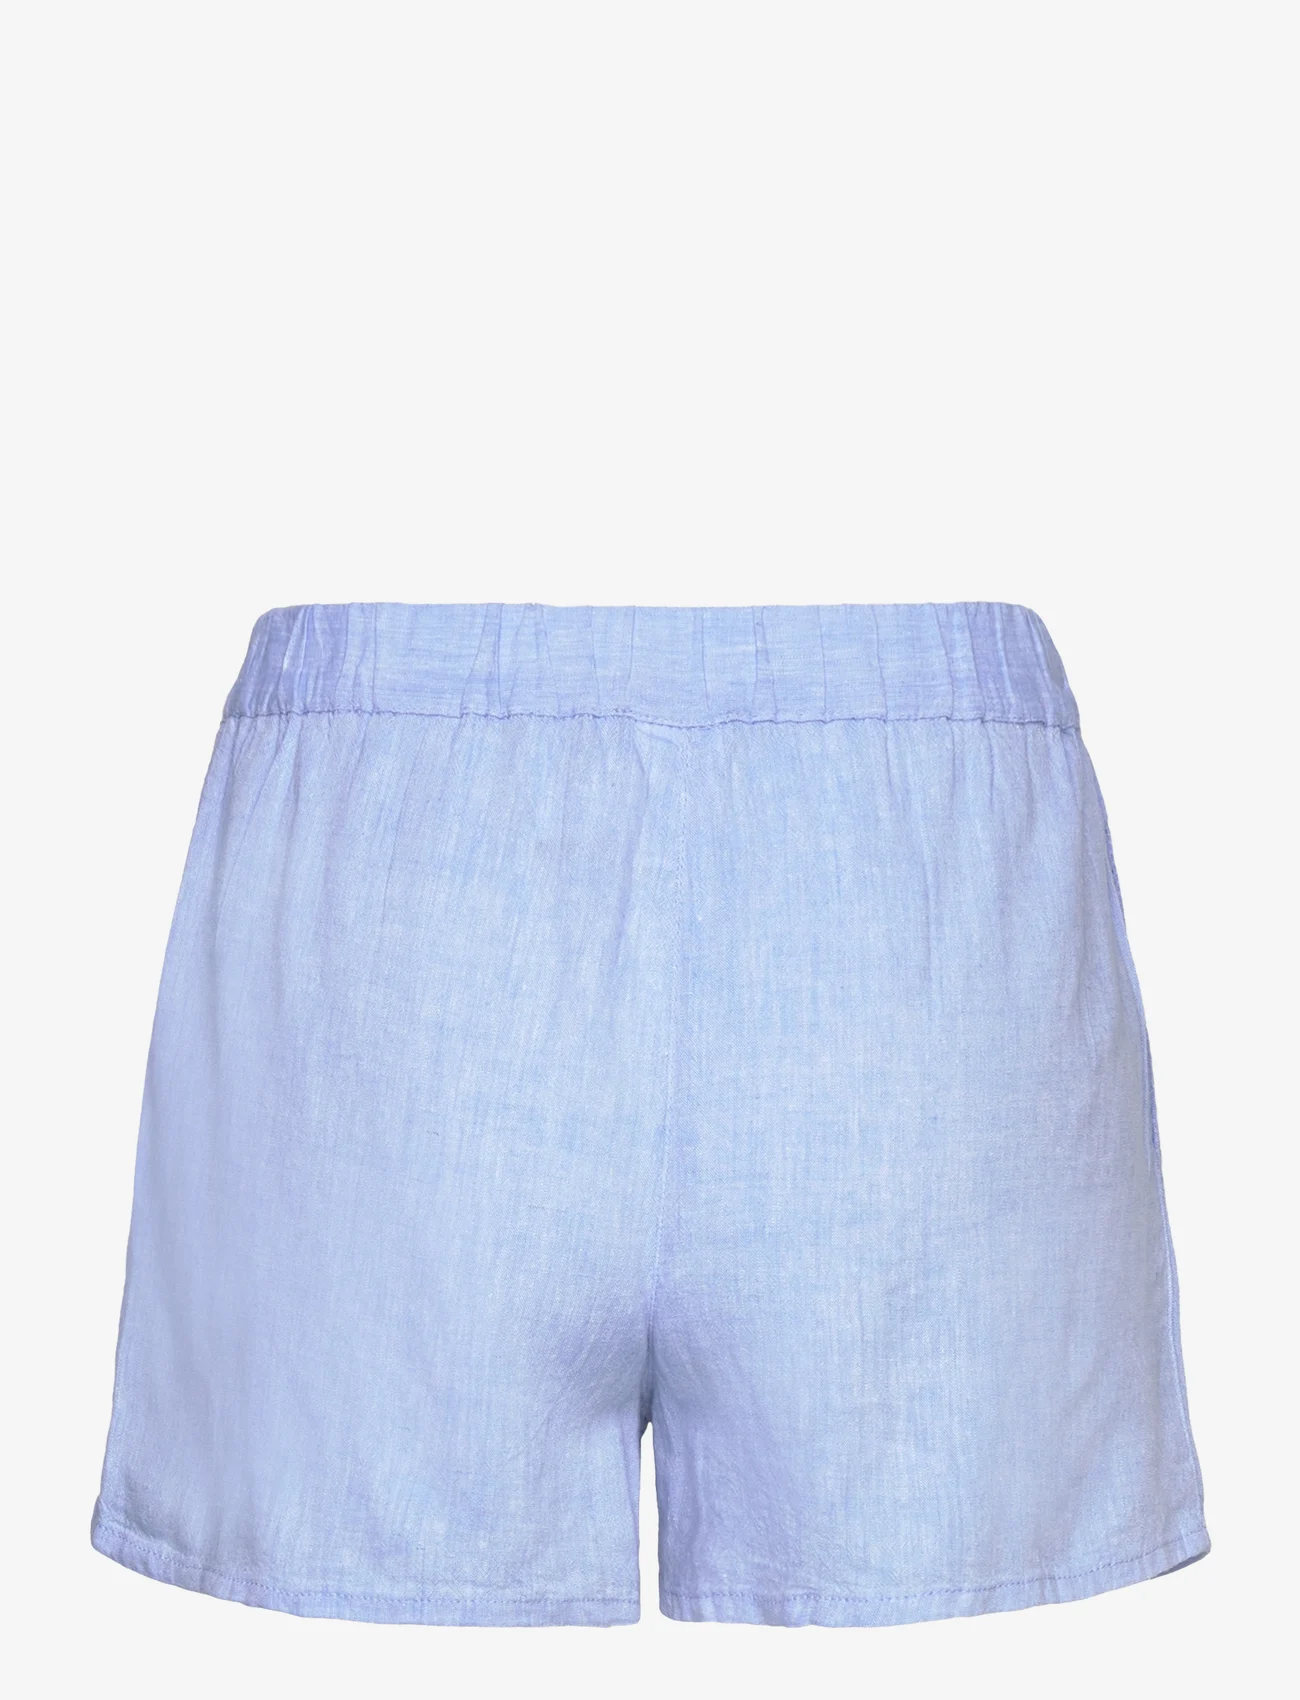 Etam - Justine - Short pyjama bottom - zemākās cenas - sky blue - 1